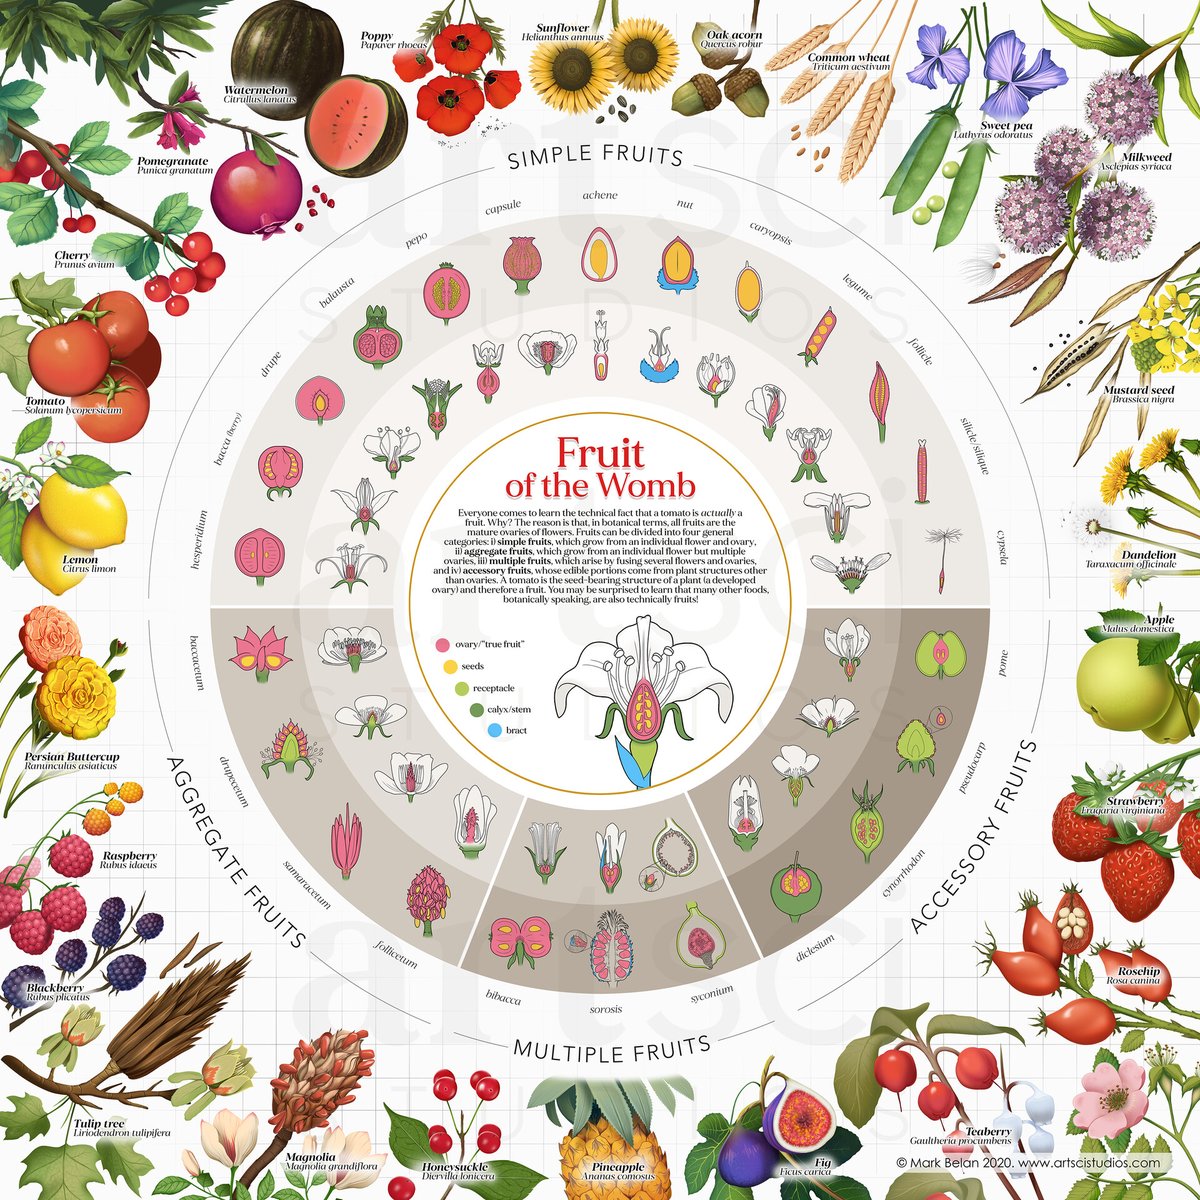 Botanical Classification and Anatomy of Fruit

#fruit #infographic #anatomy #plants #carpology #botany #science #art